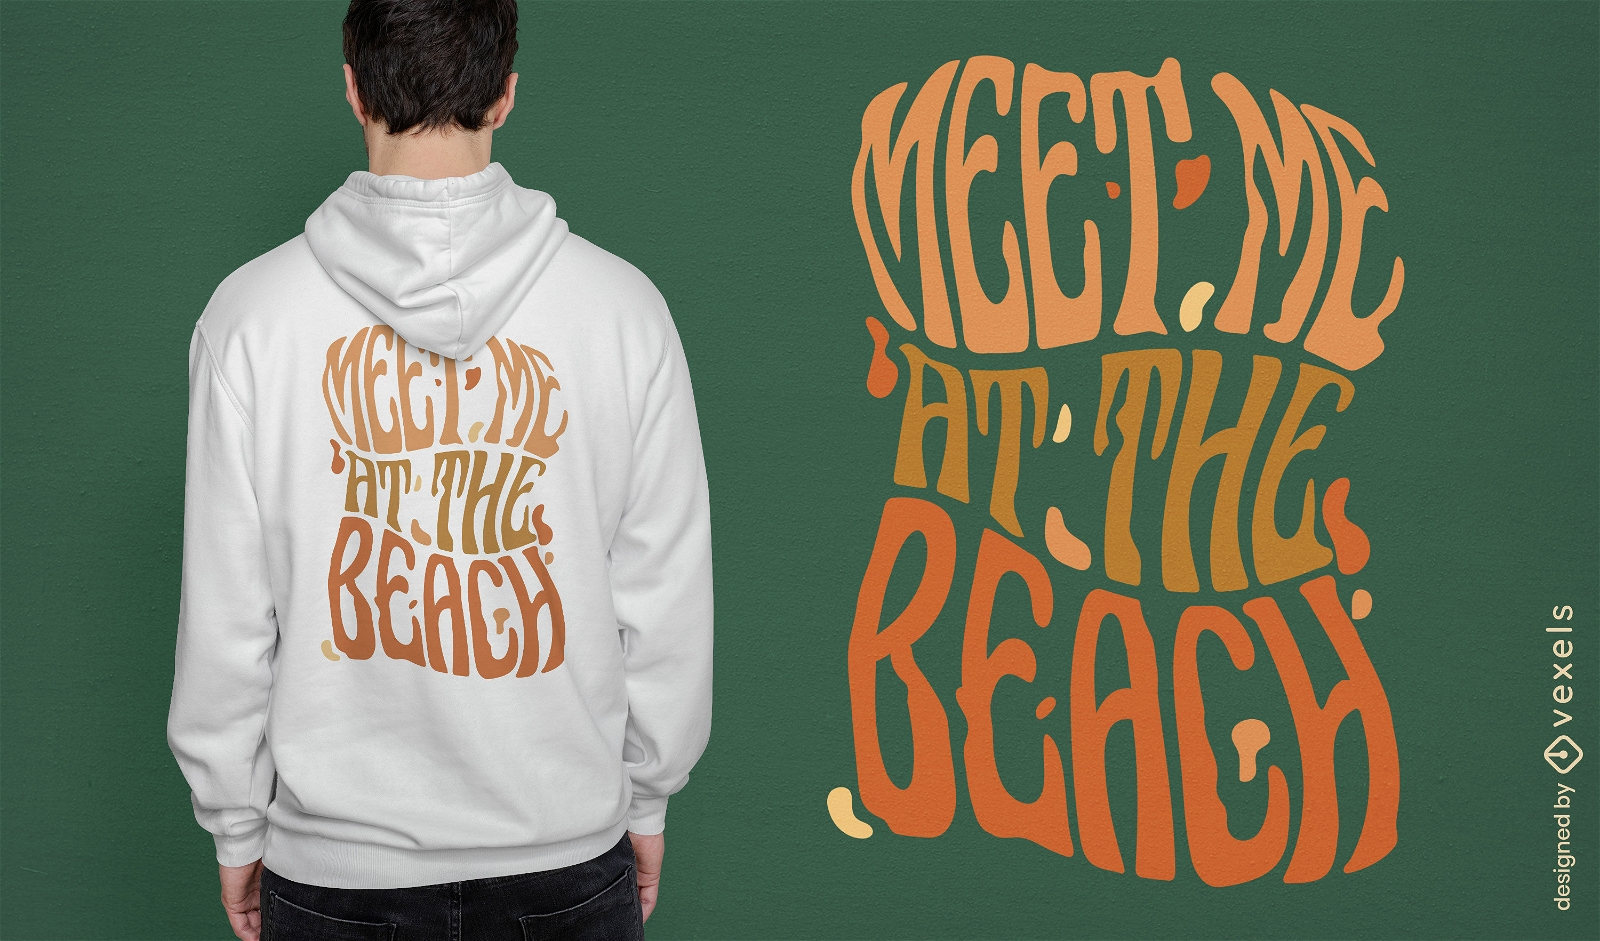 Meet me at the beach hippie t-shirt design